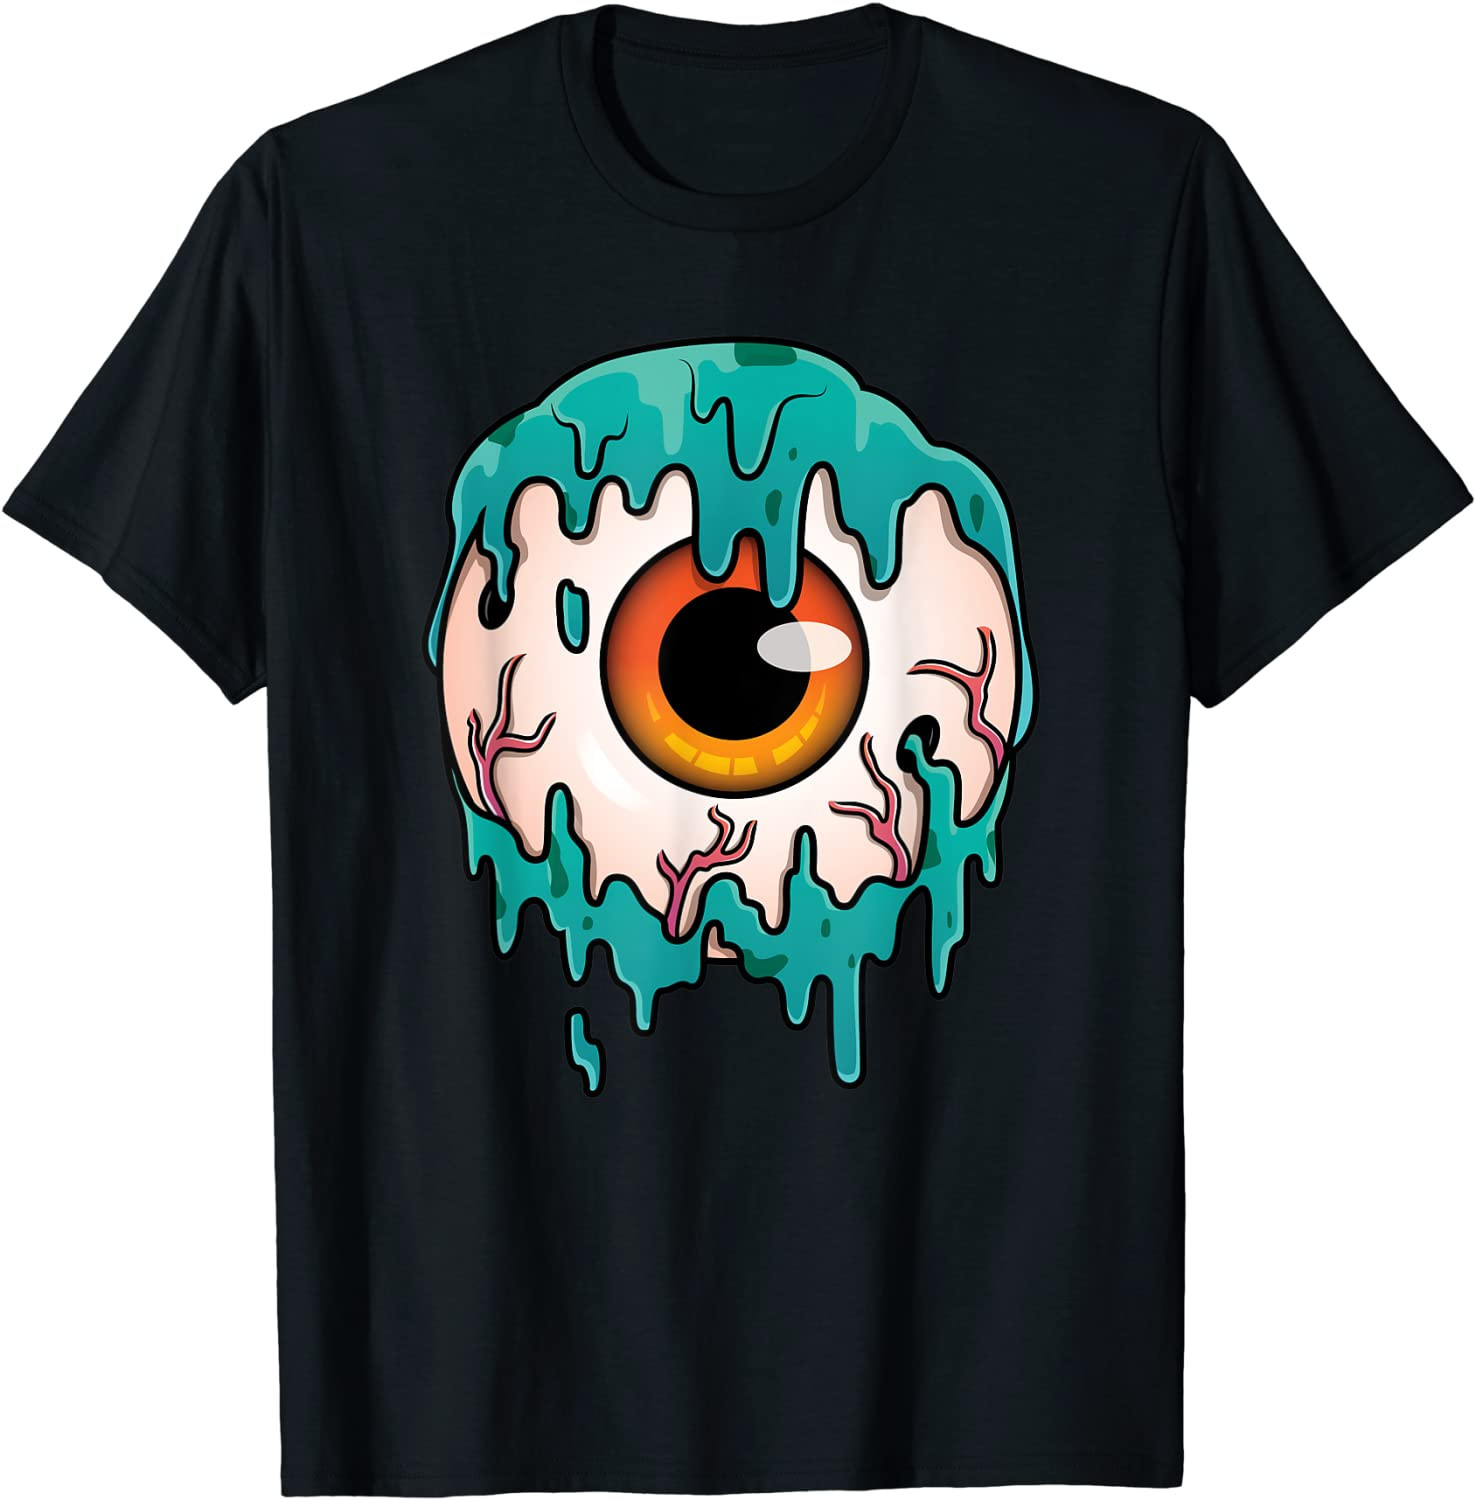 Slimy Human Eyeball Creepy Halloween Costume Scary T-Shirt